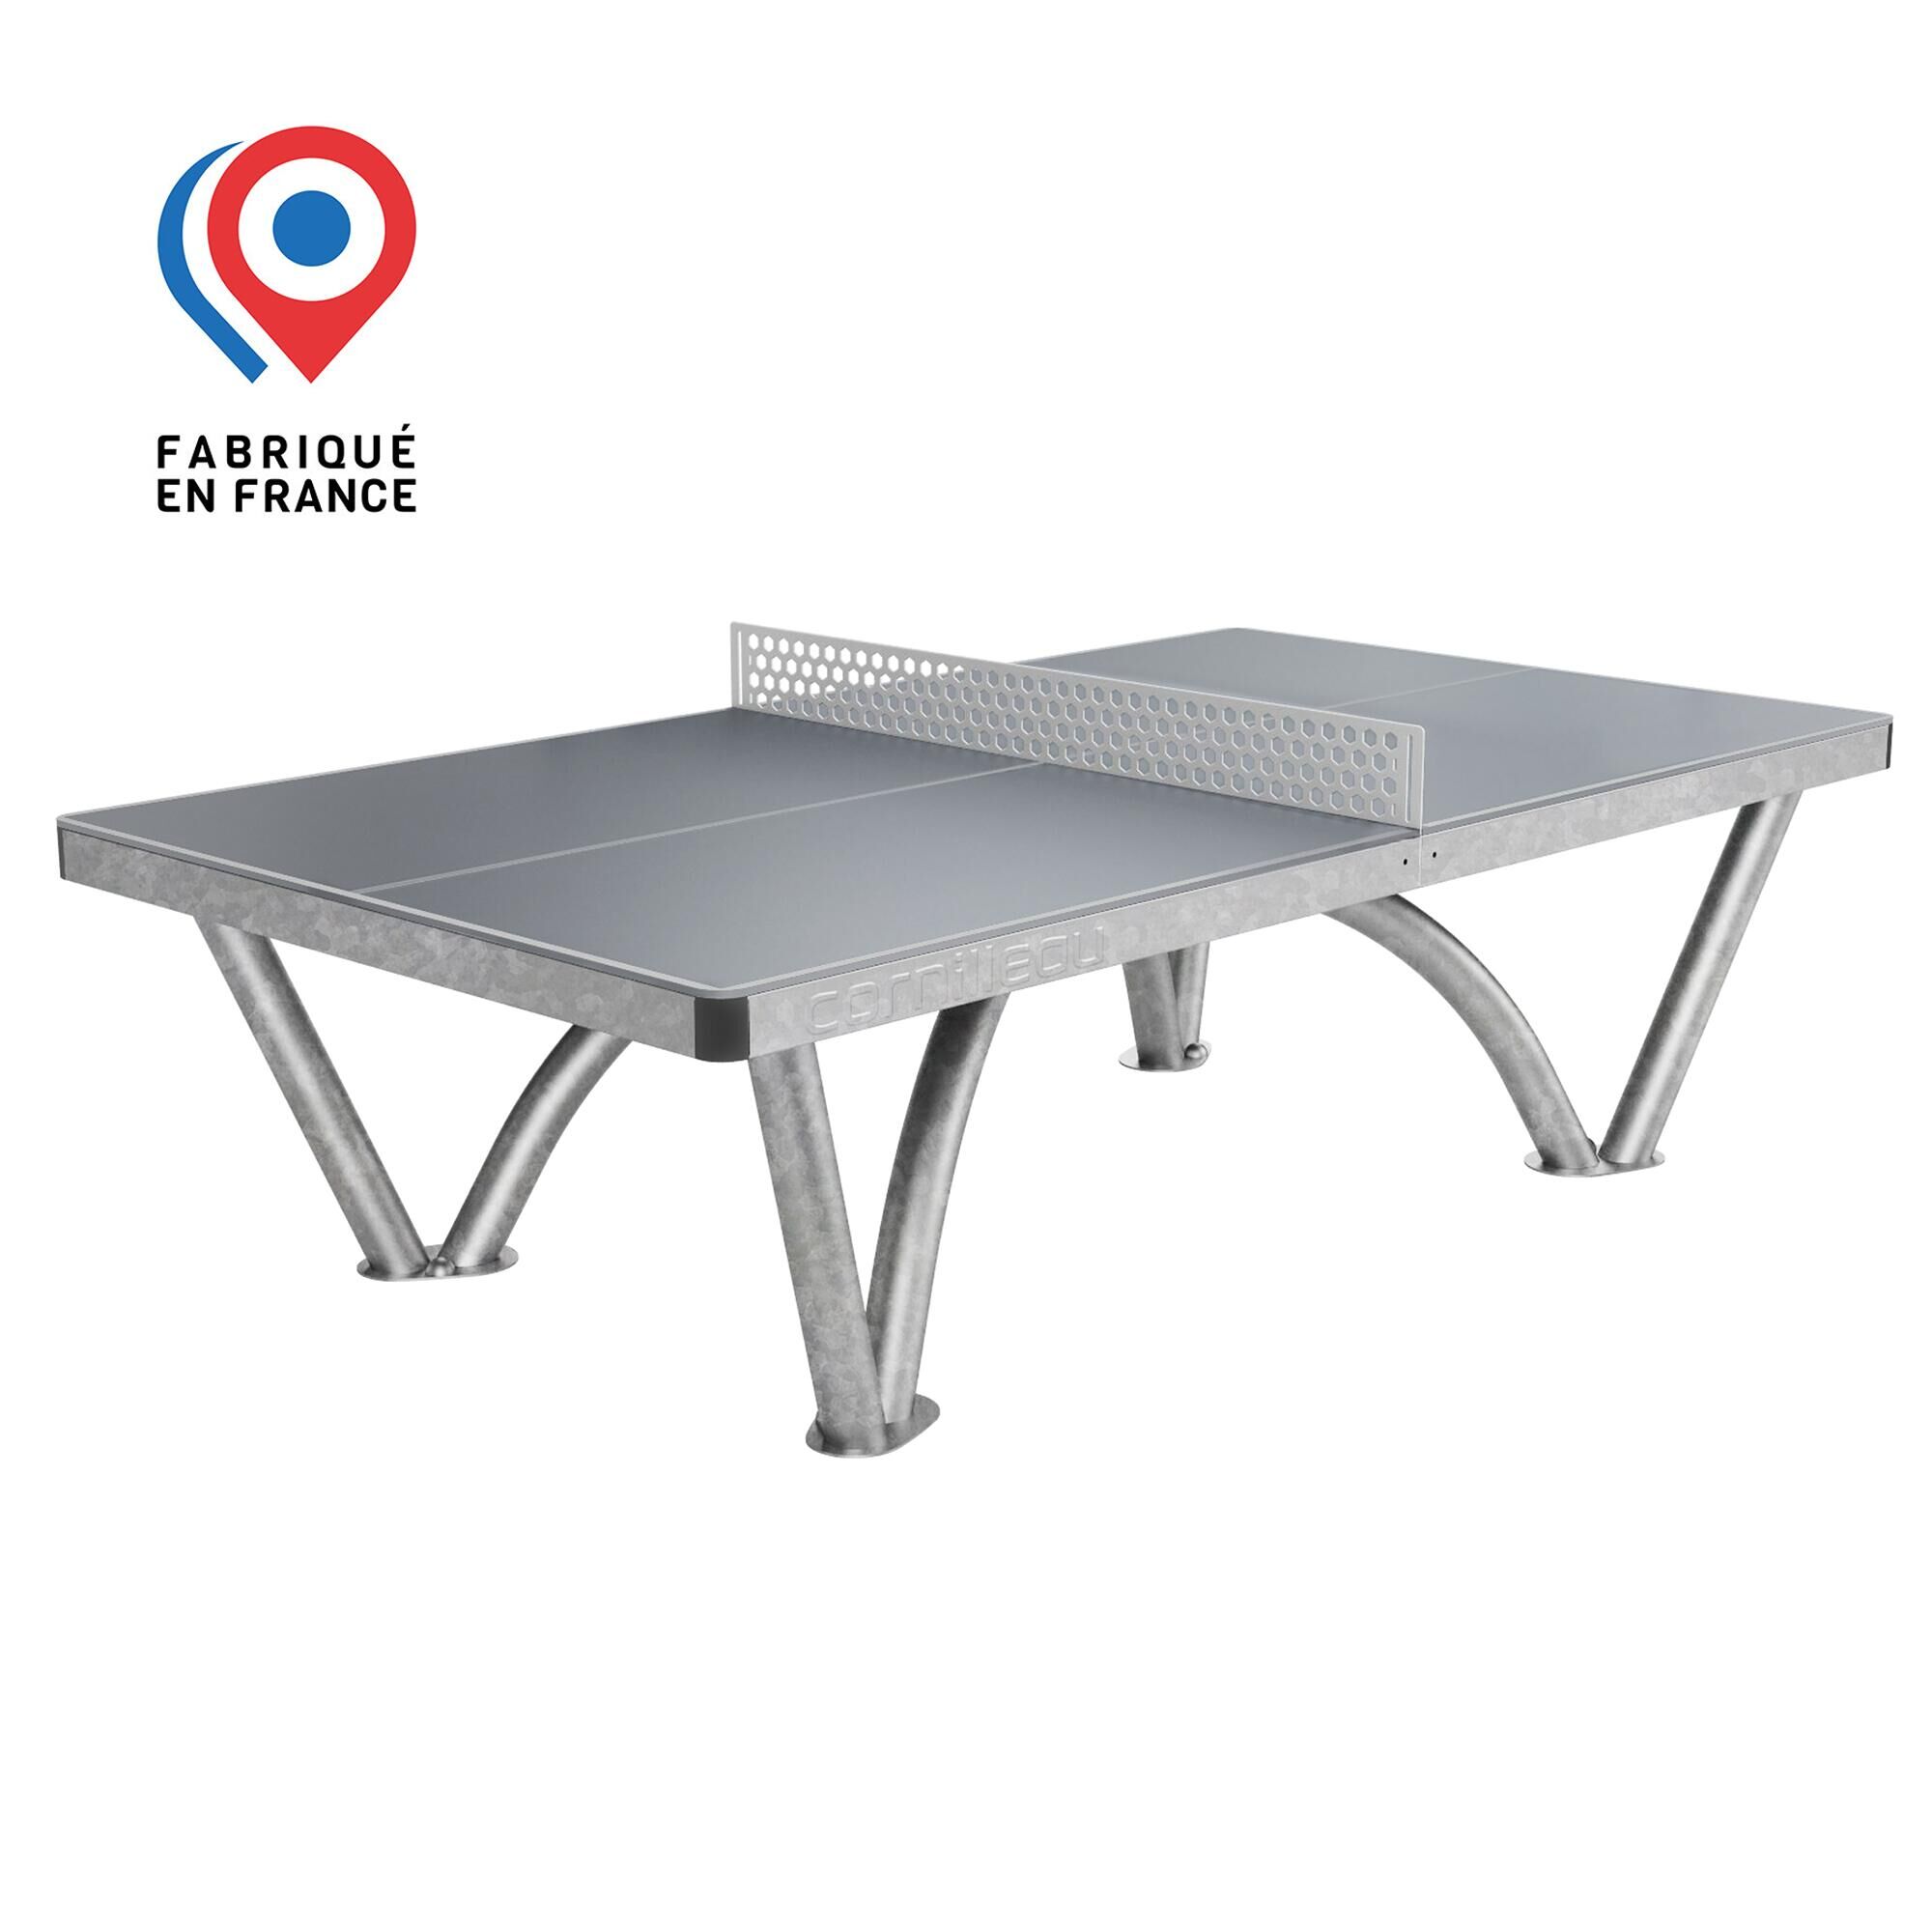 CORNILLEAU PARK Outdoor Table Tennis Table